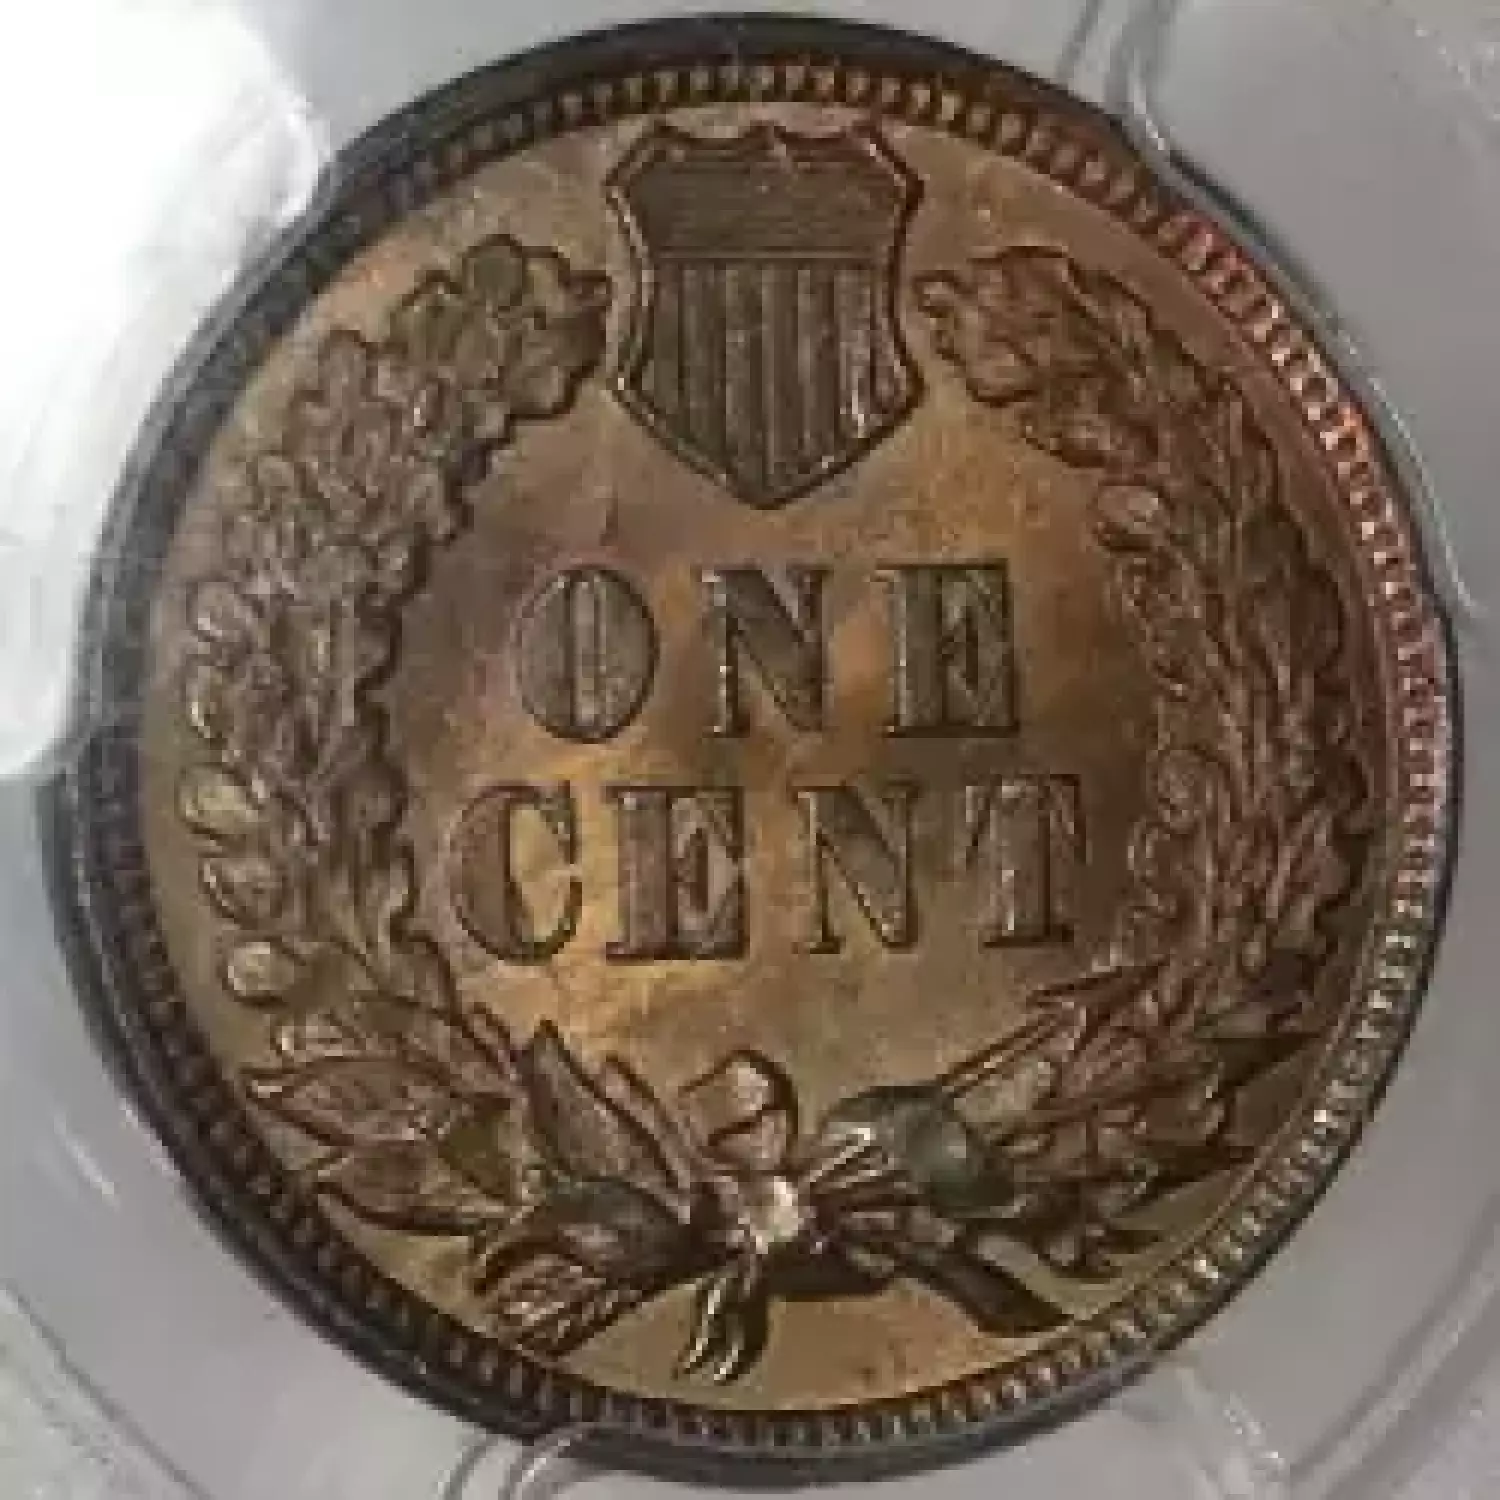 1899 1C, RB (6)